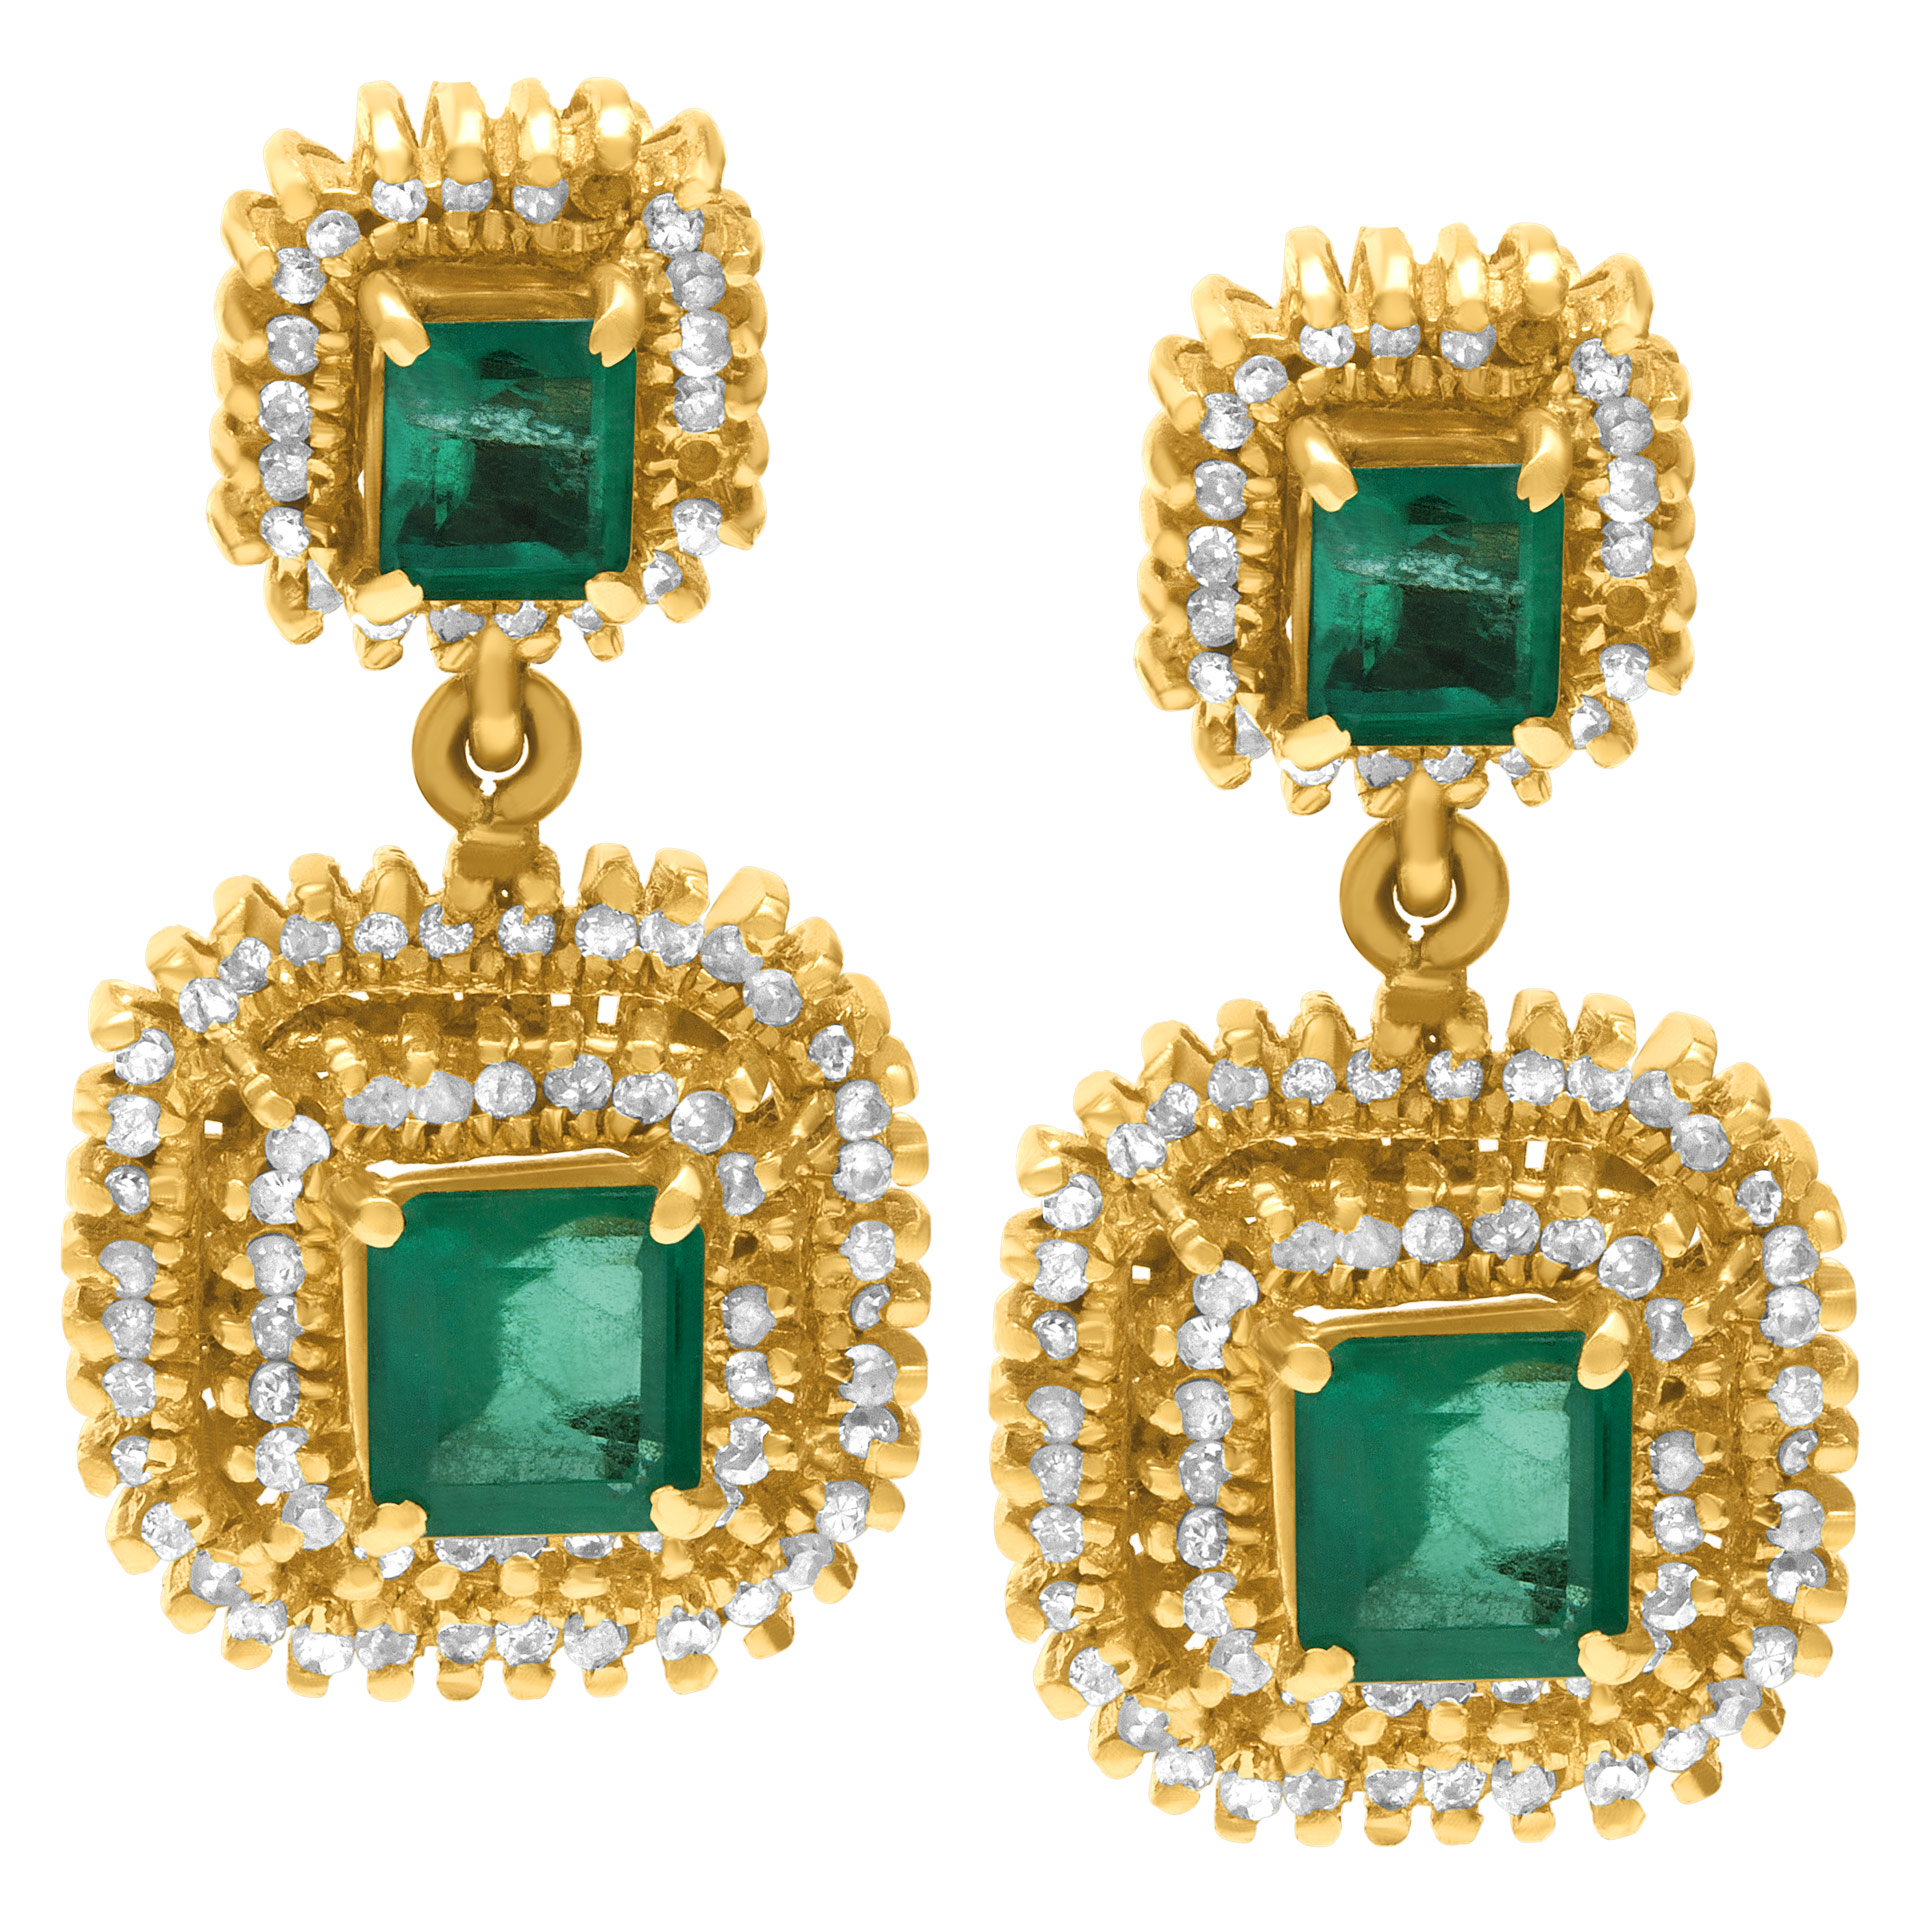 Sweet diamond and emeralds earrings